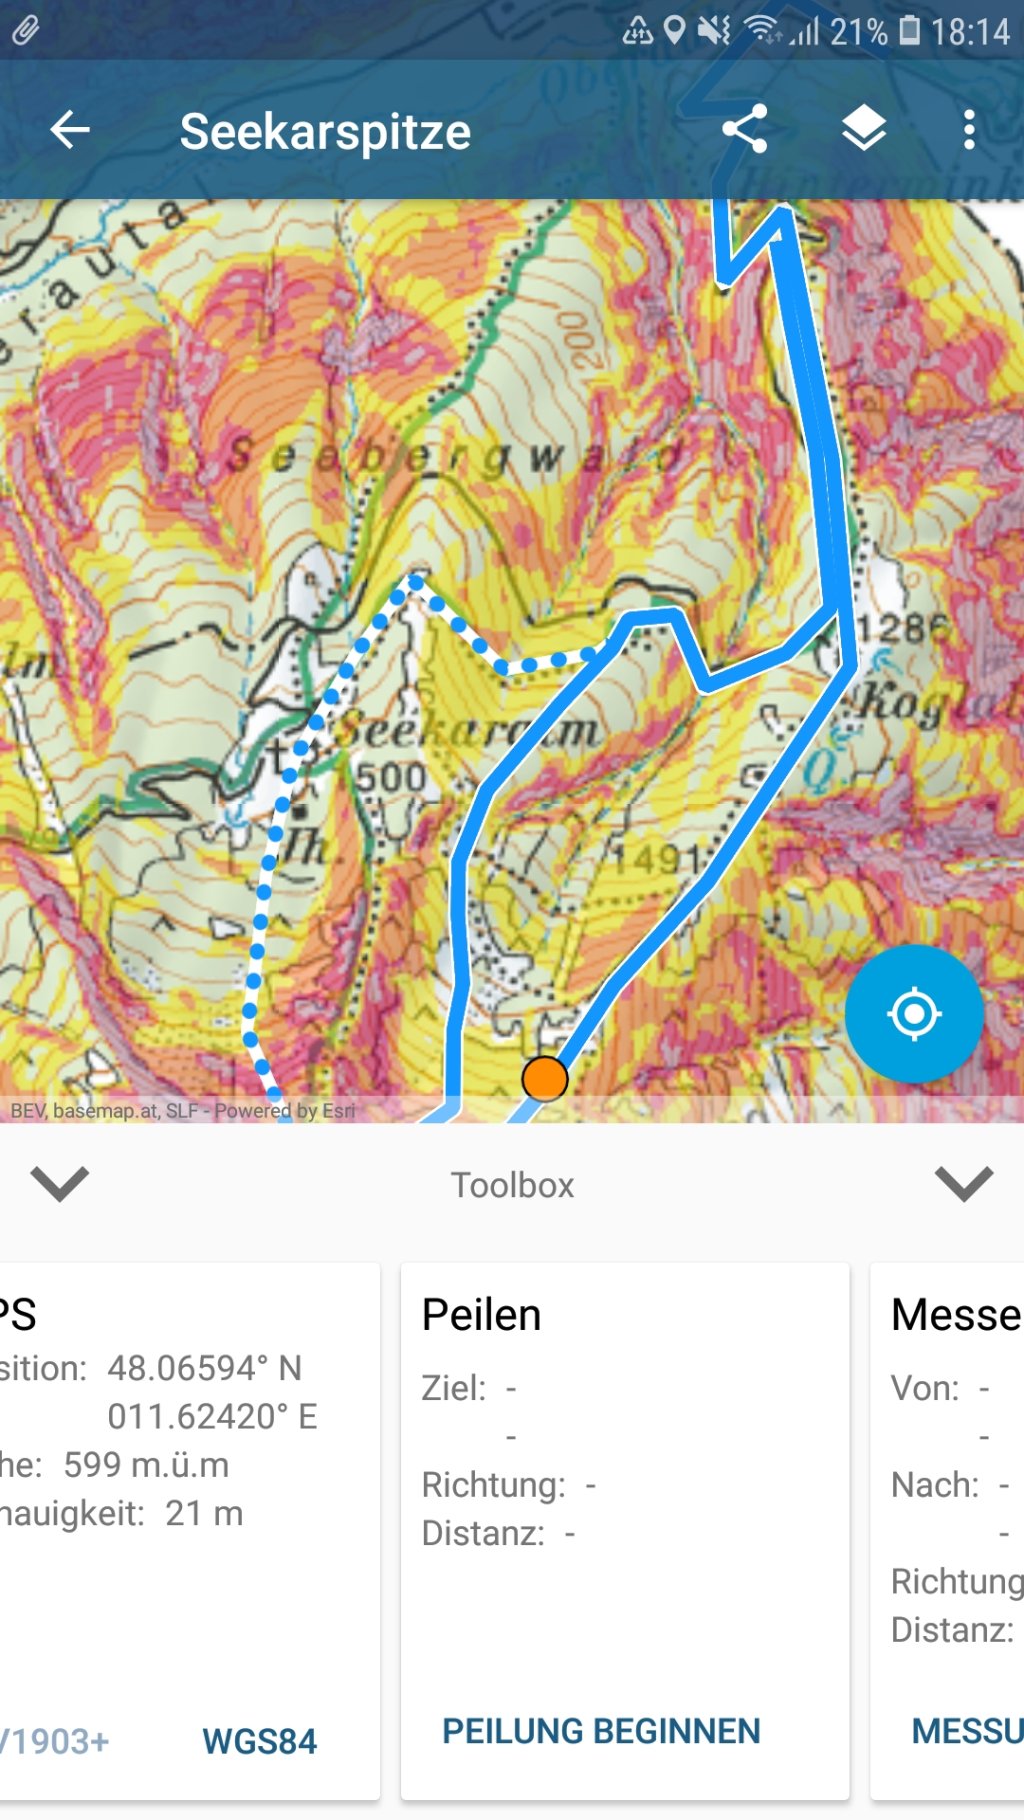 Tour planning Seekarspitze